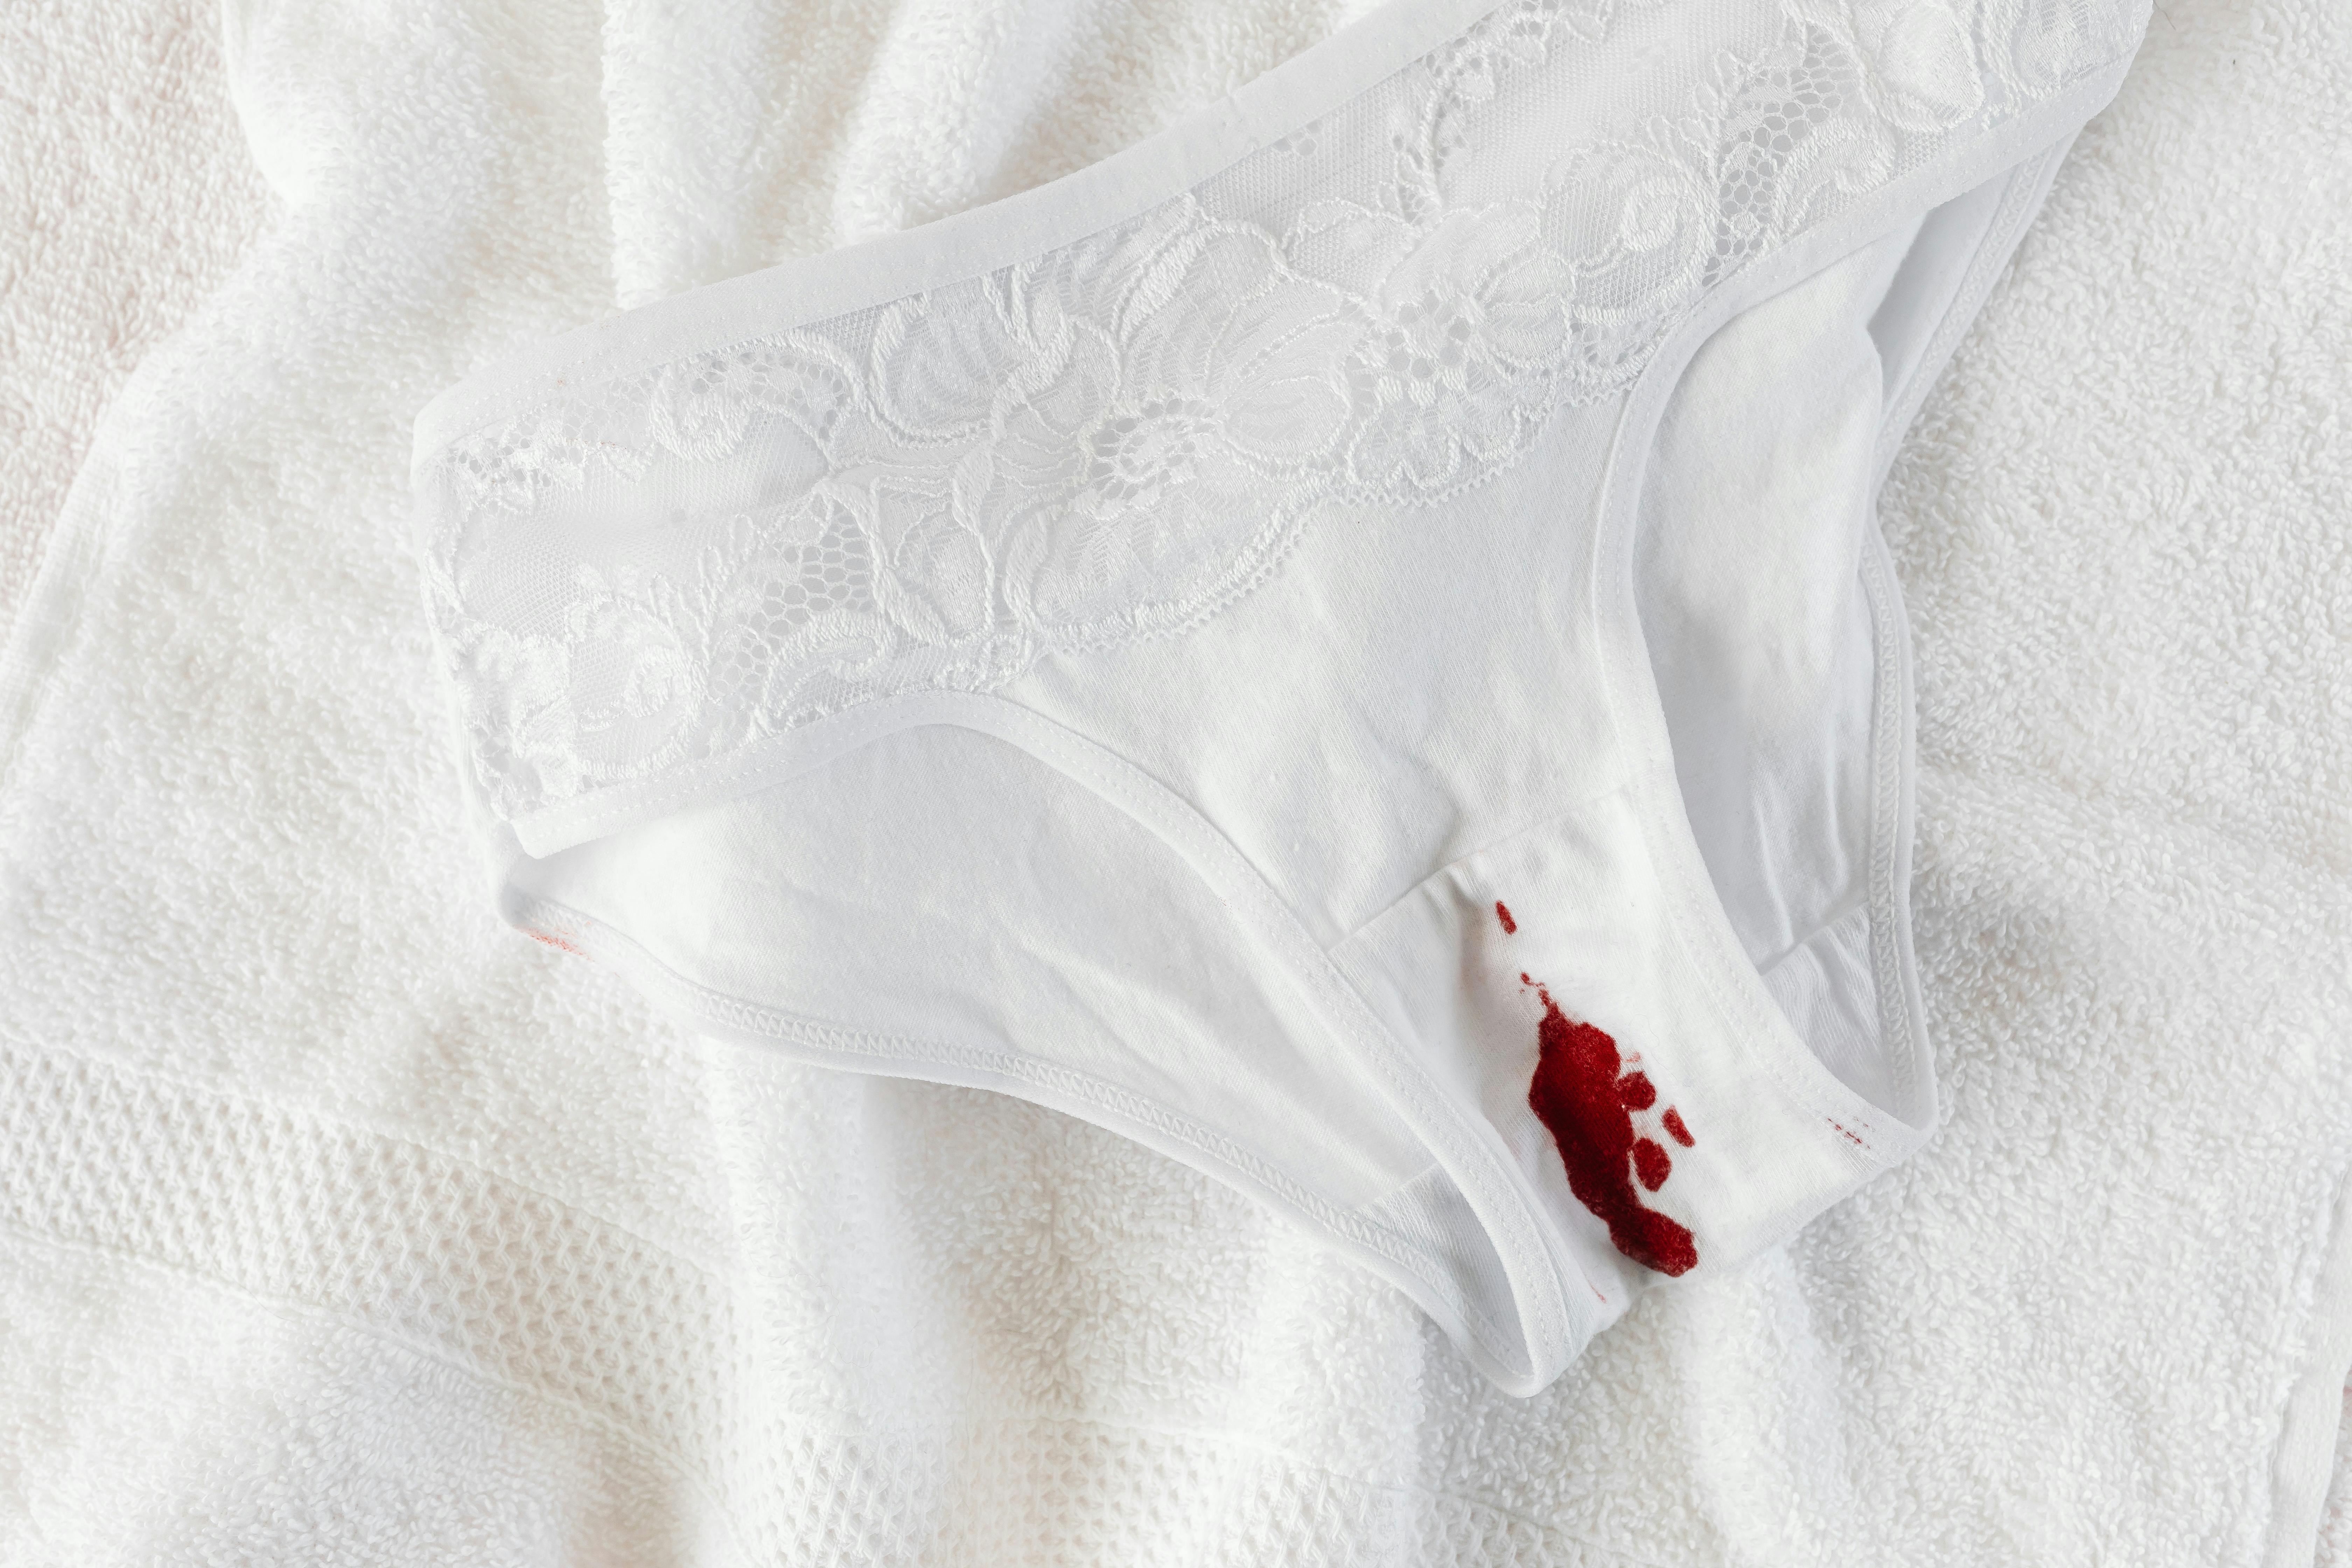 Panties Bloody Stain. Image & Photo (Free Trial)